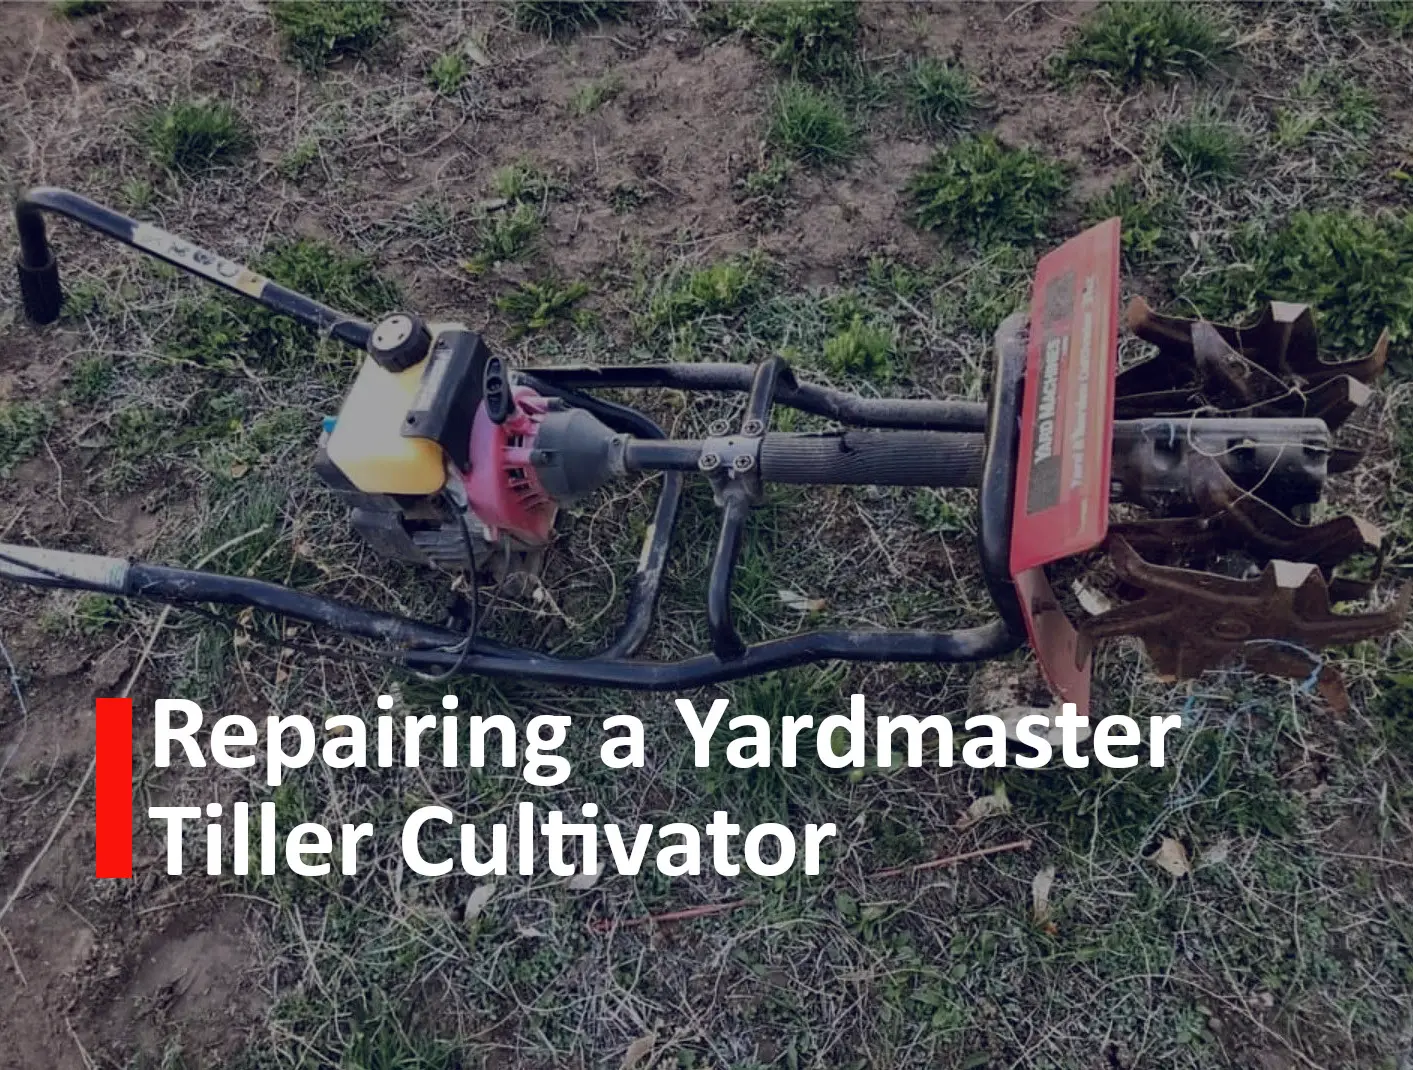 Repairing a Yardmaster Tiller Cultivator